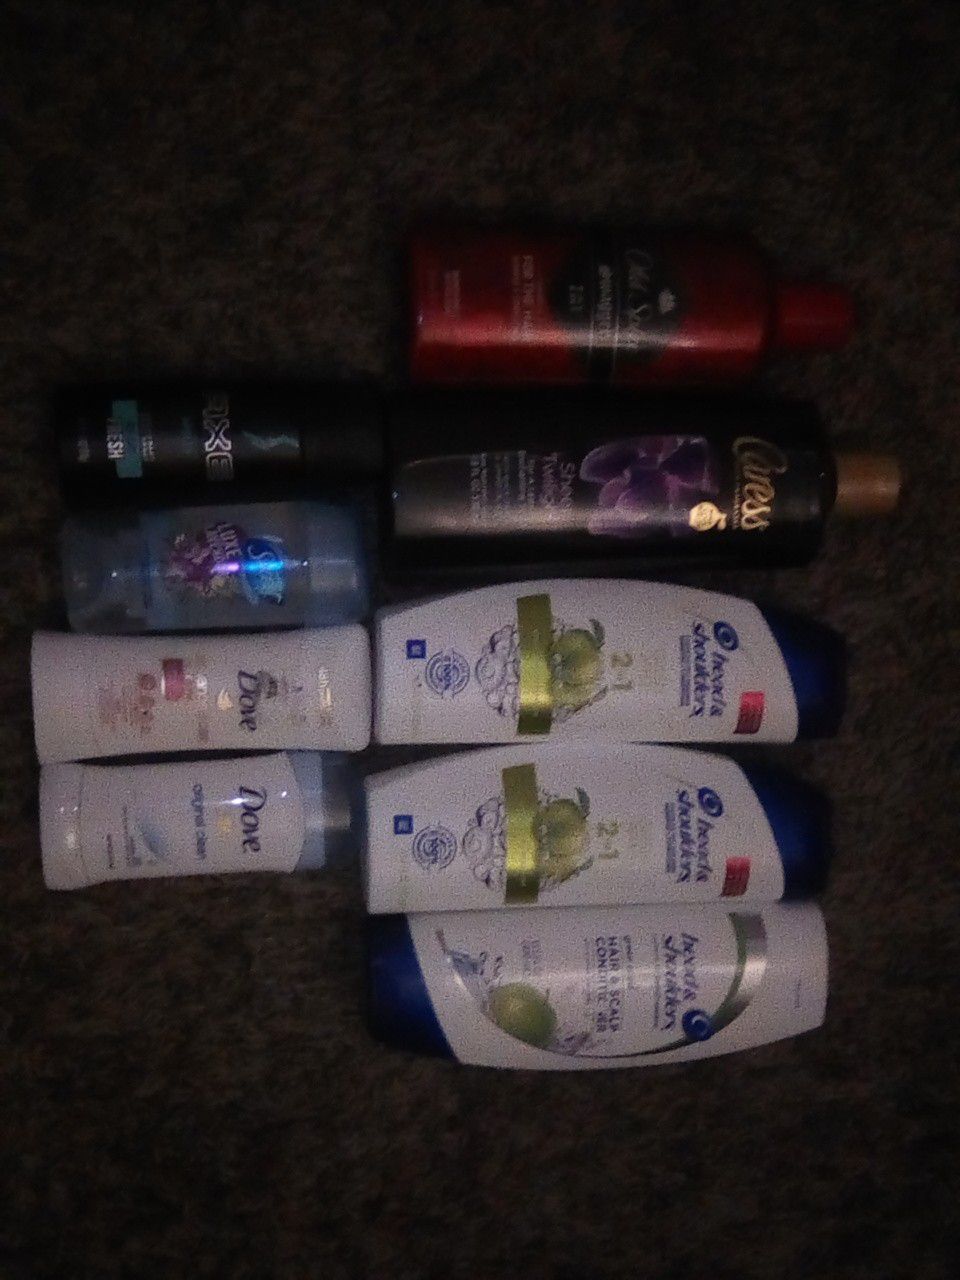 1)Old spice 2in1 shampoo & conditioner 1) Caress body wash 2) Head & shoulders 2in1 1) conditioner 1)axe body spray 1)Secret & 2)Dove deodarent